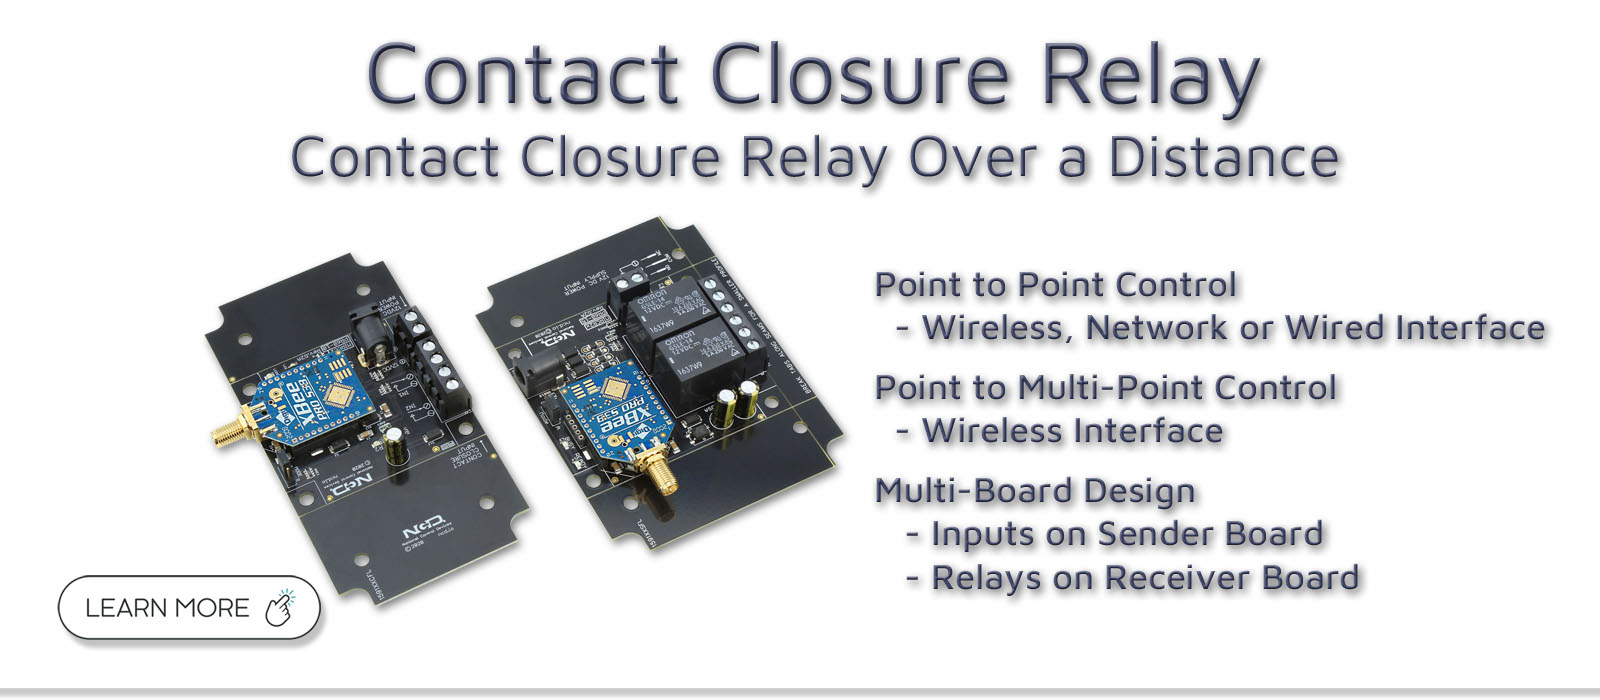 Contact Closure Relay